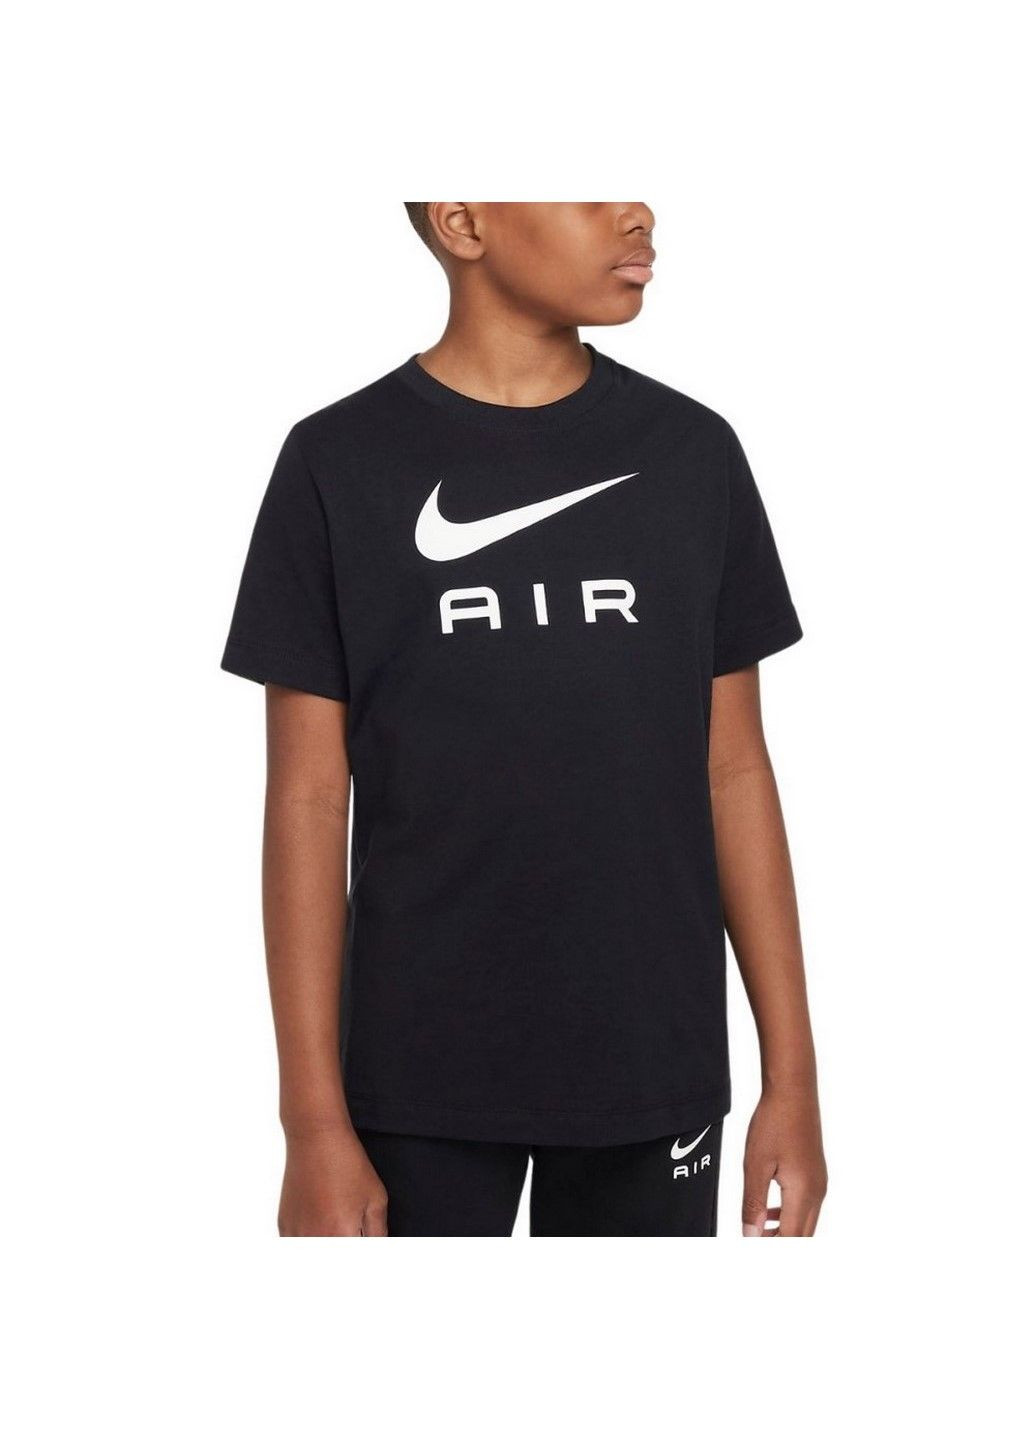 Черная демисезонная детская футболка k nsw tee air dv3934-010 Nike